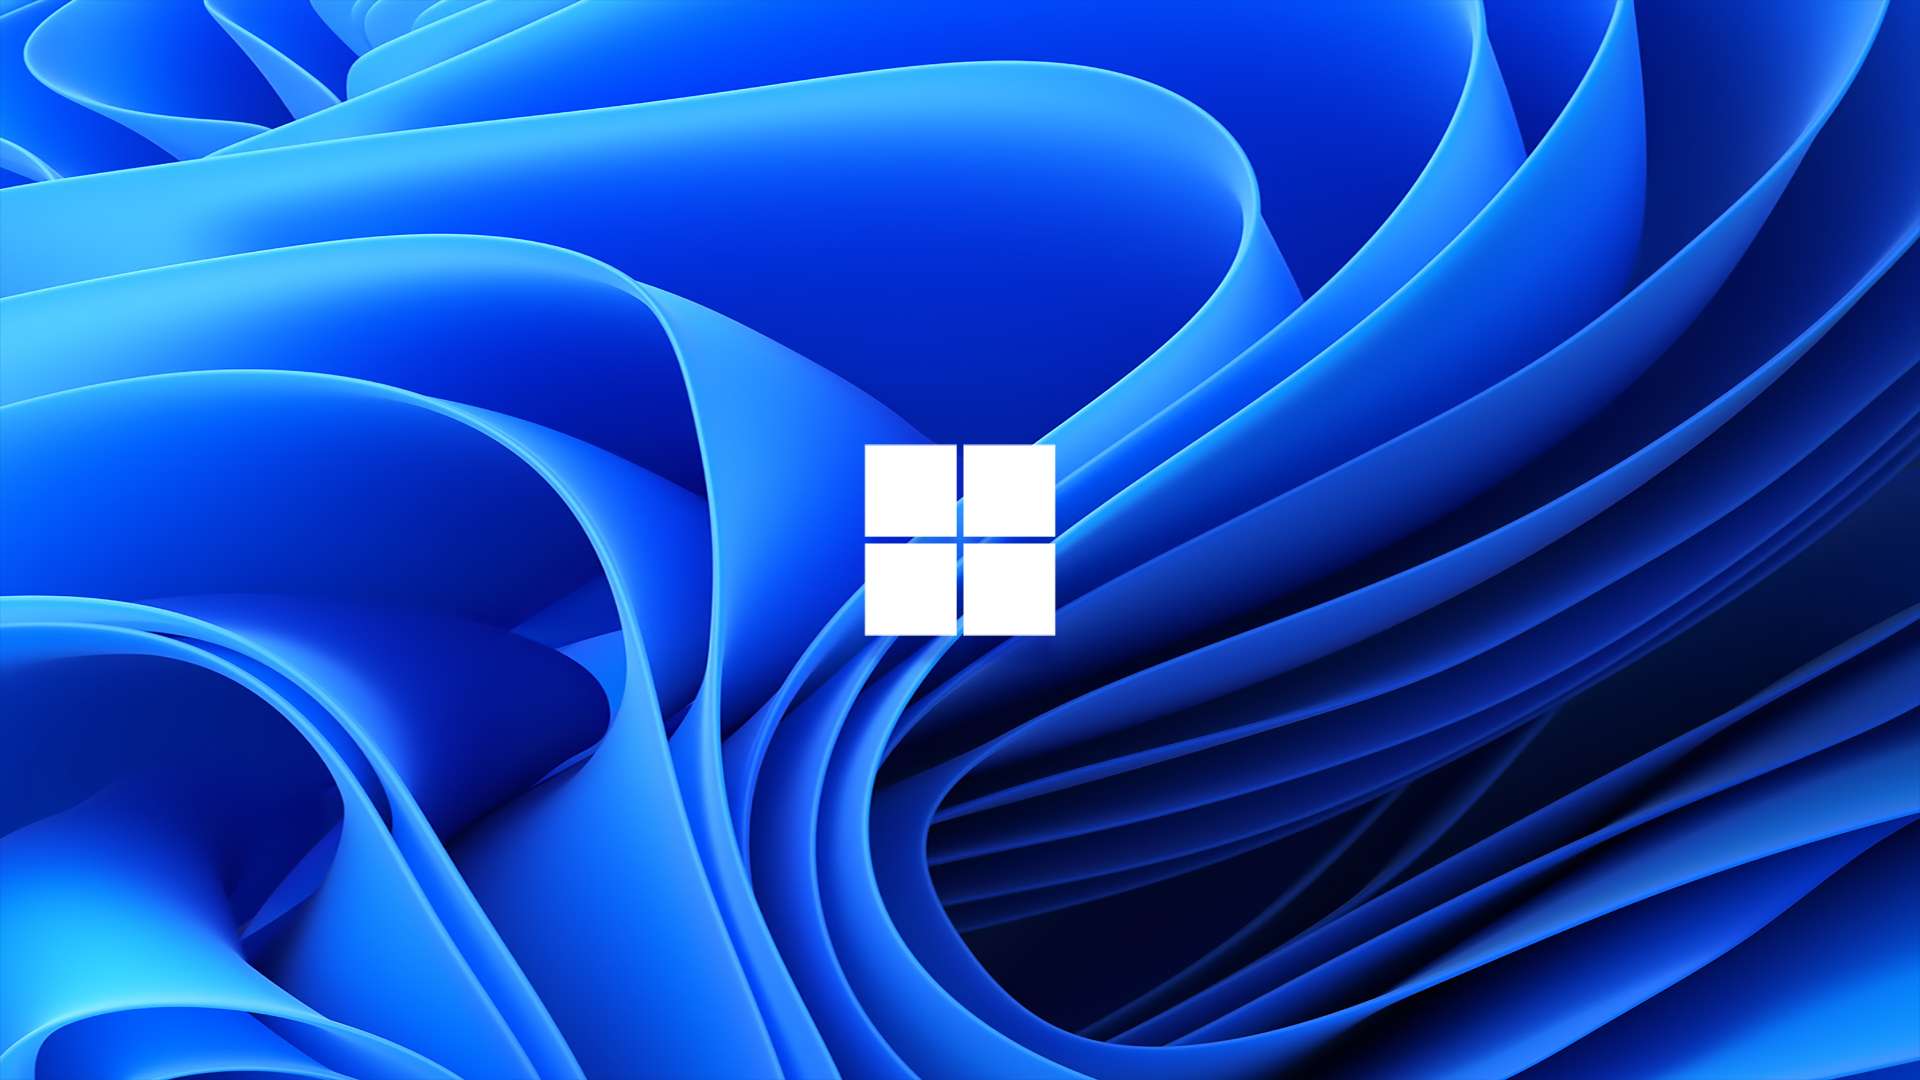 Windows 11 Blue Wallpaper. Windows Latest News